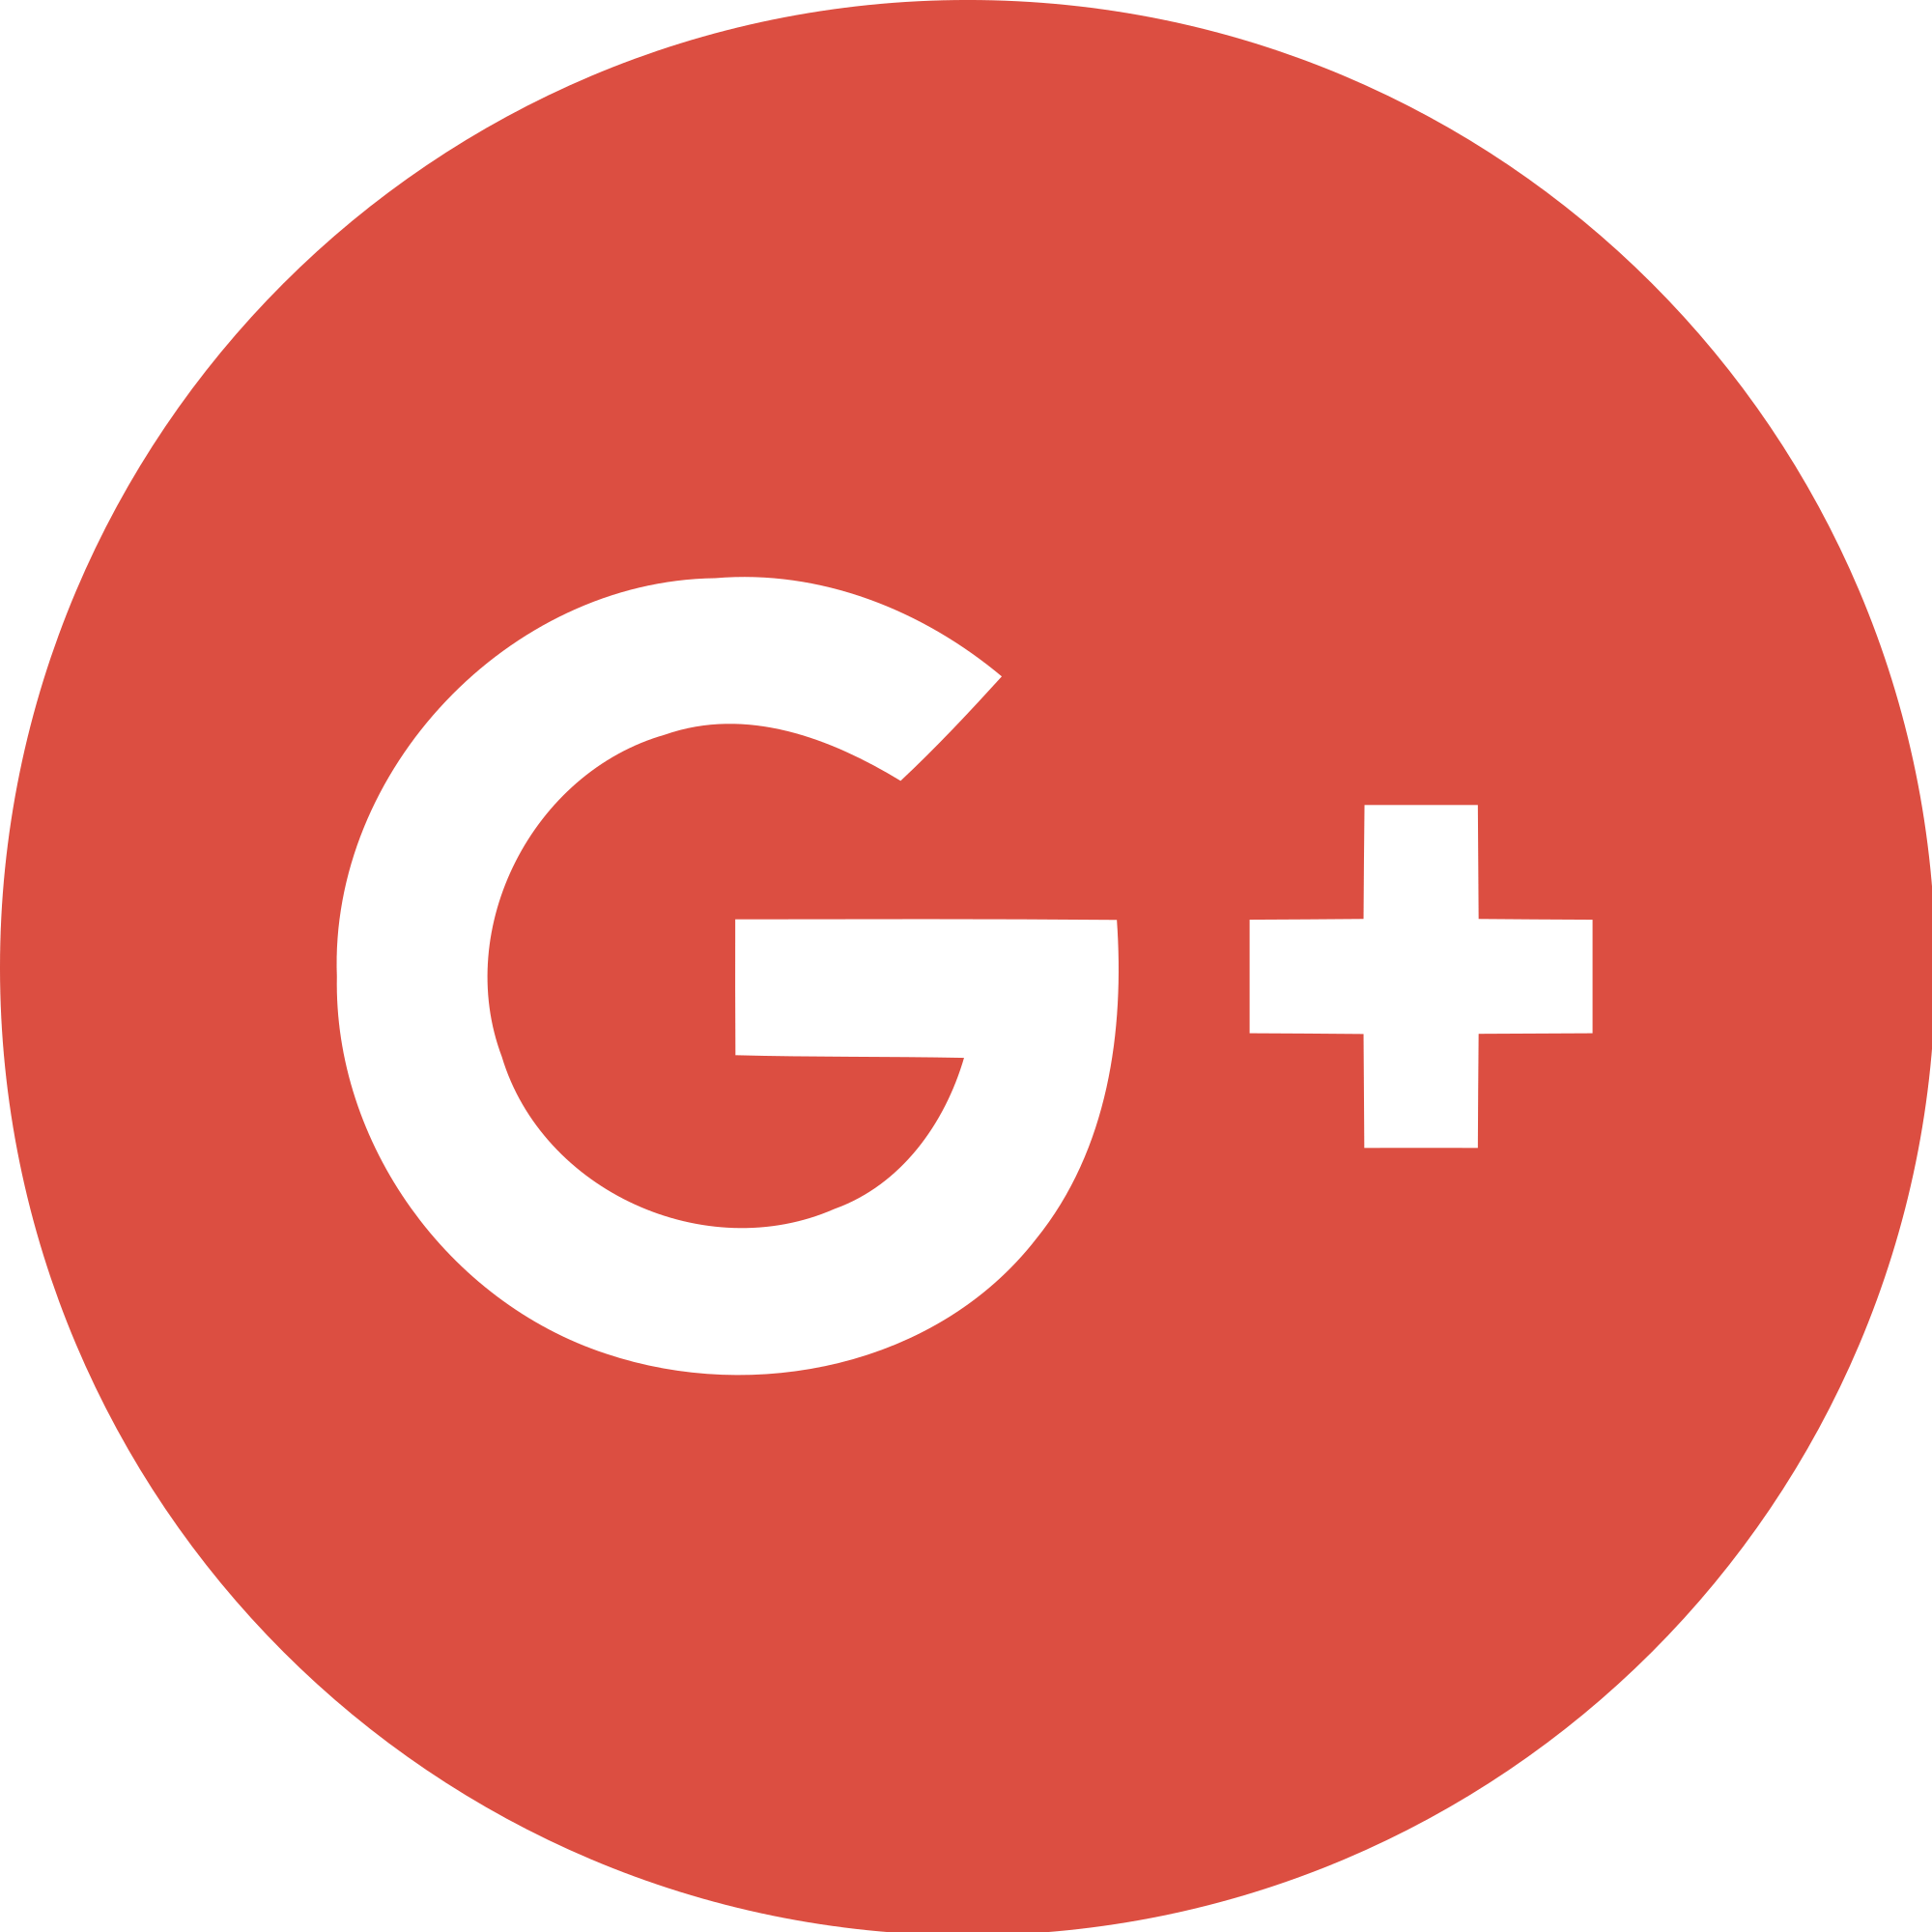 New Google Plus Logo - Google Plus logo 2015.svg